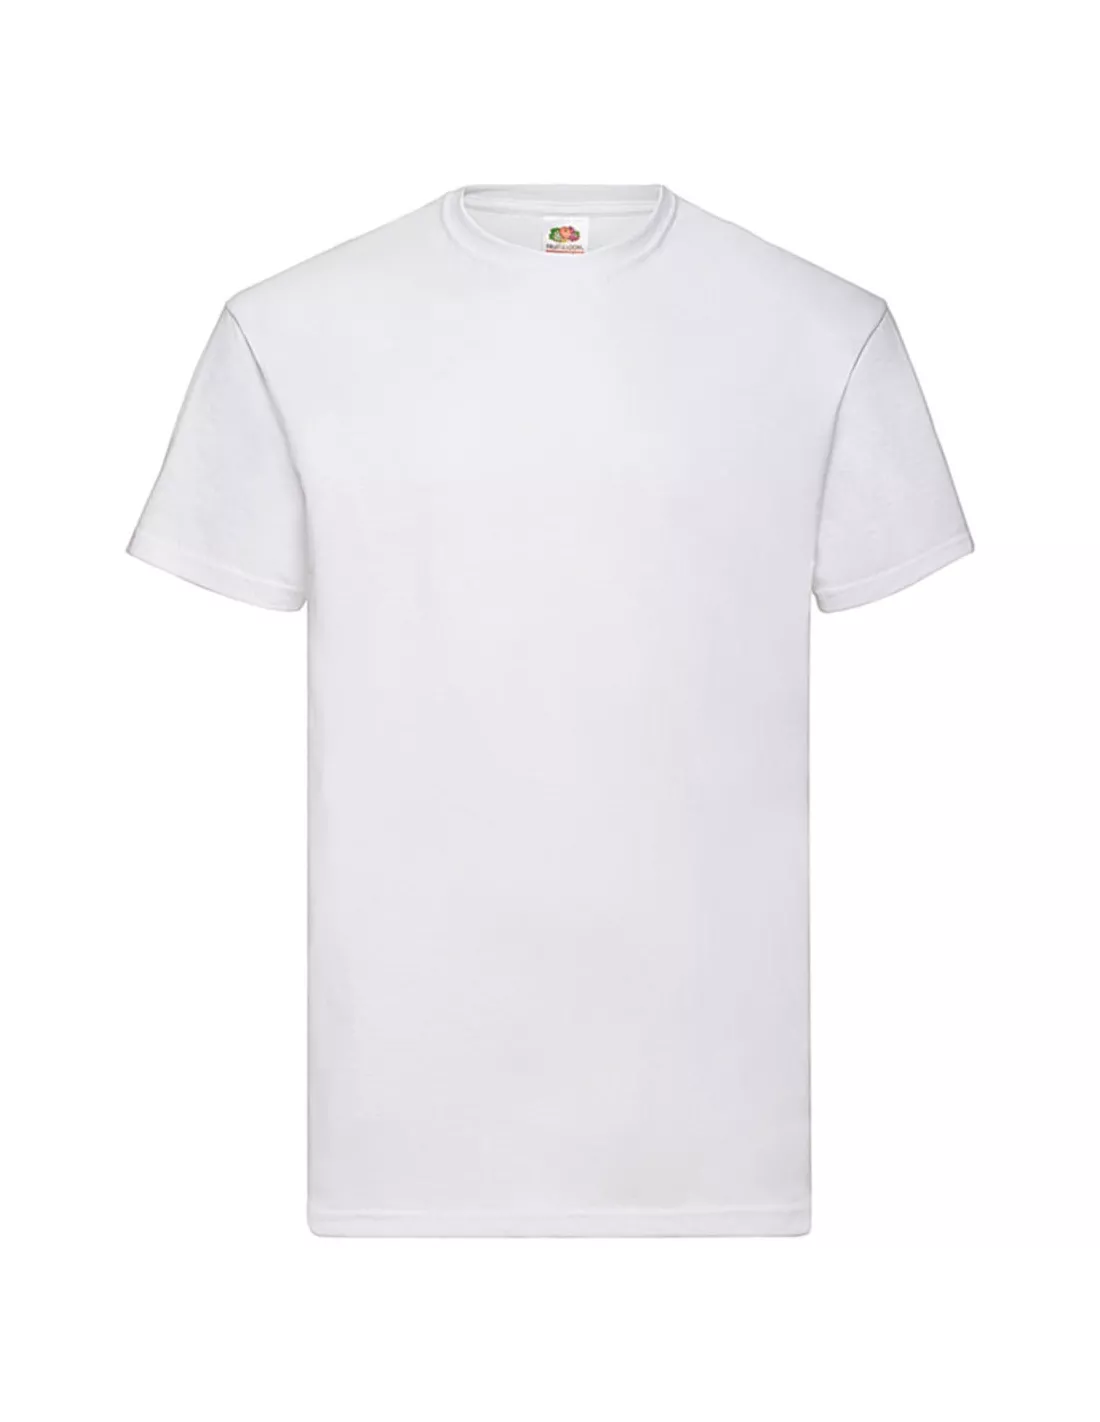 Camiseta básica de hombre 150 gr